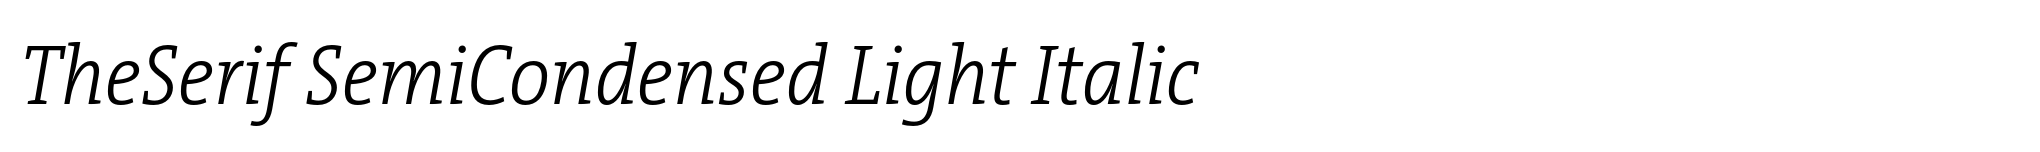 TheSerif SemiCondensed Light Italic image